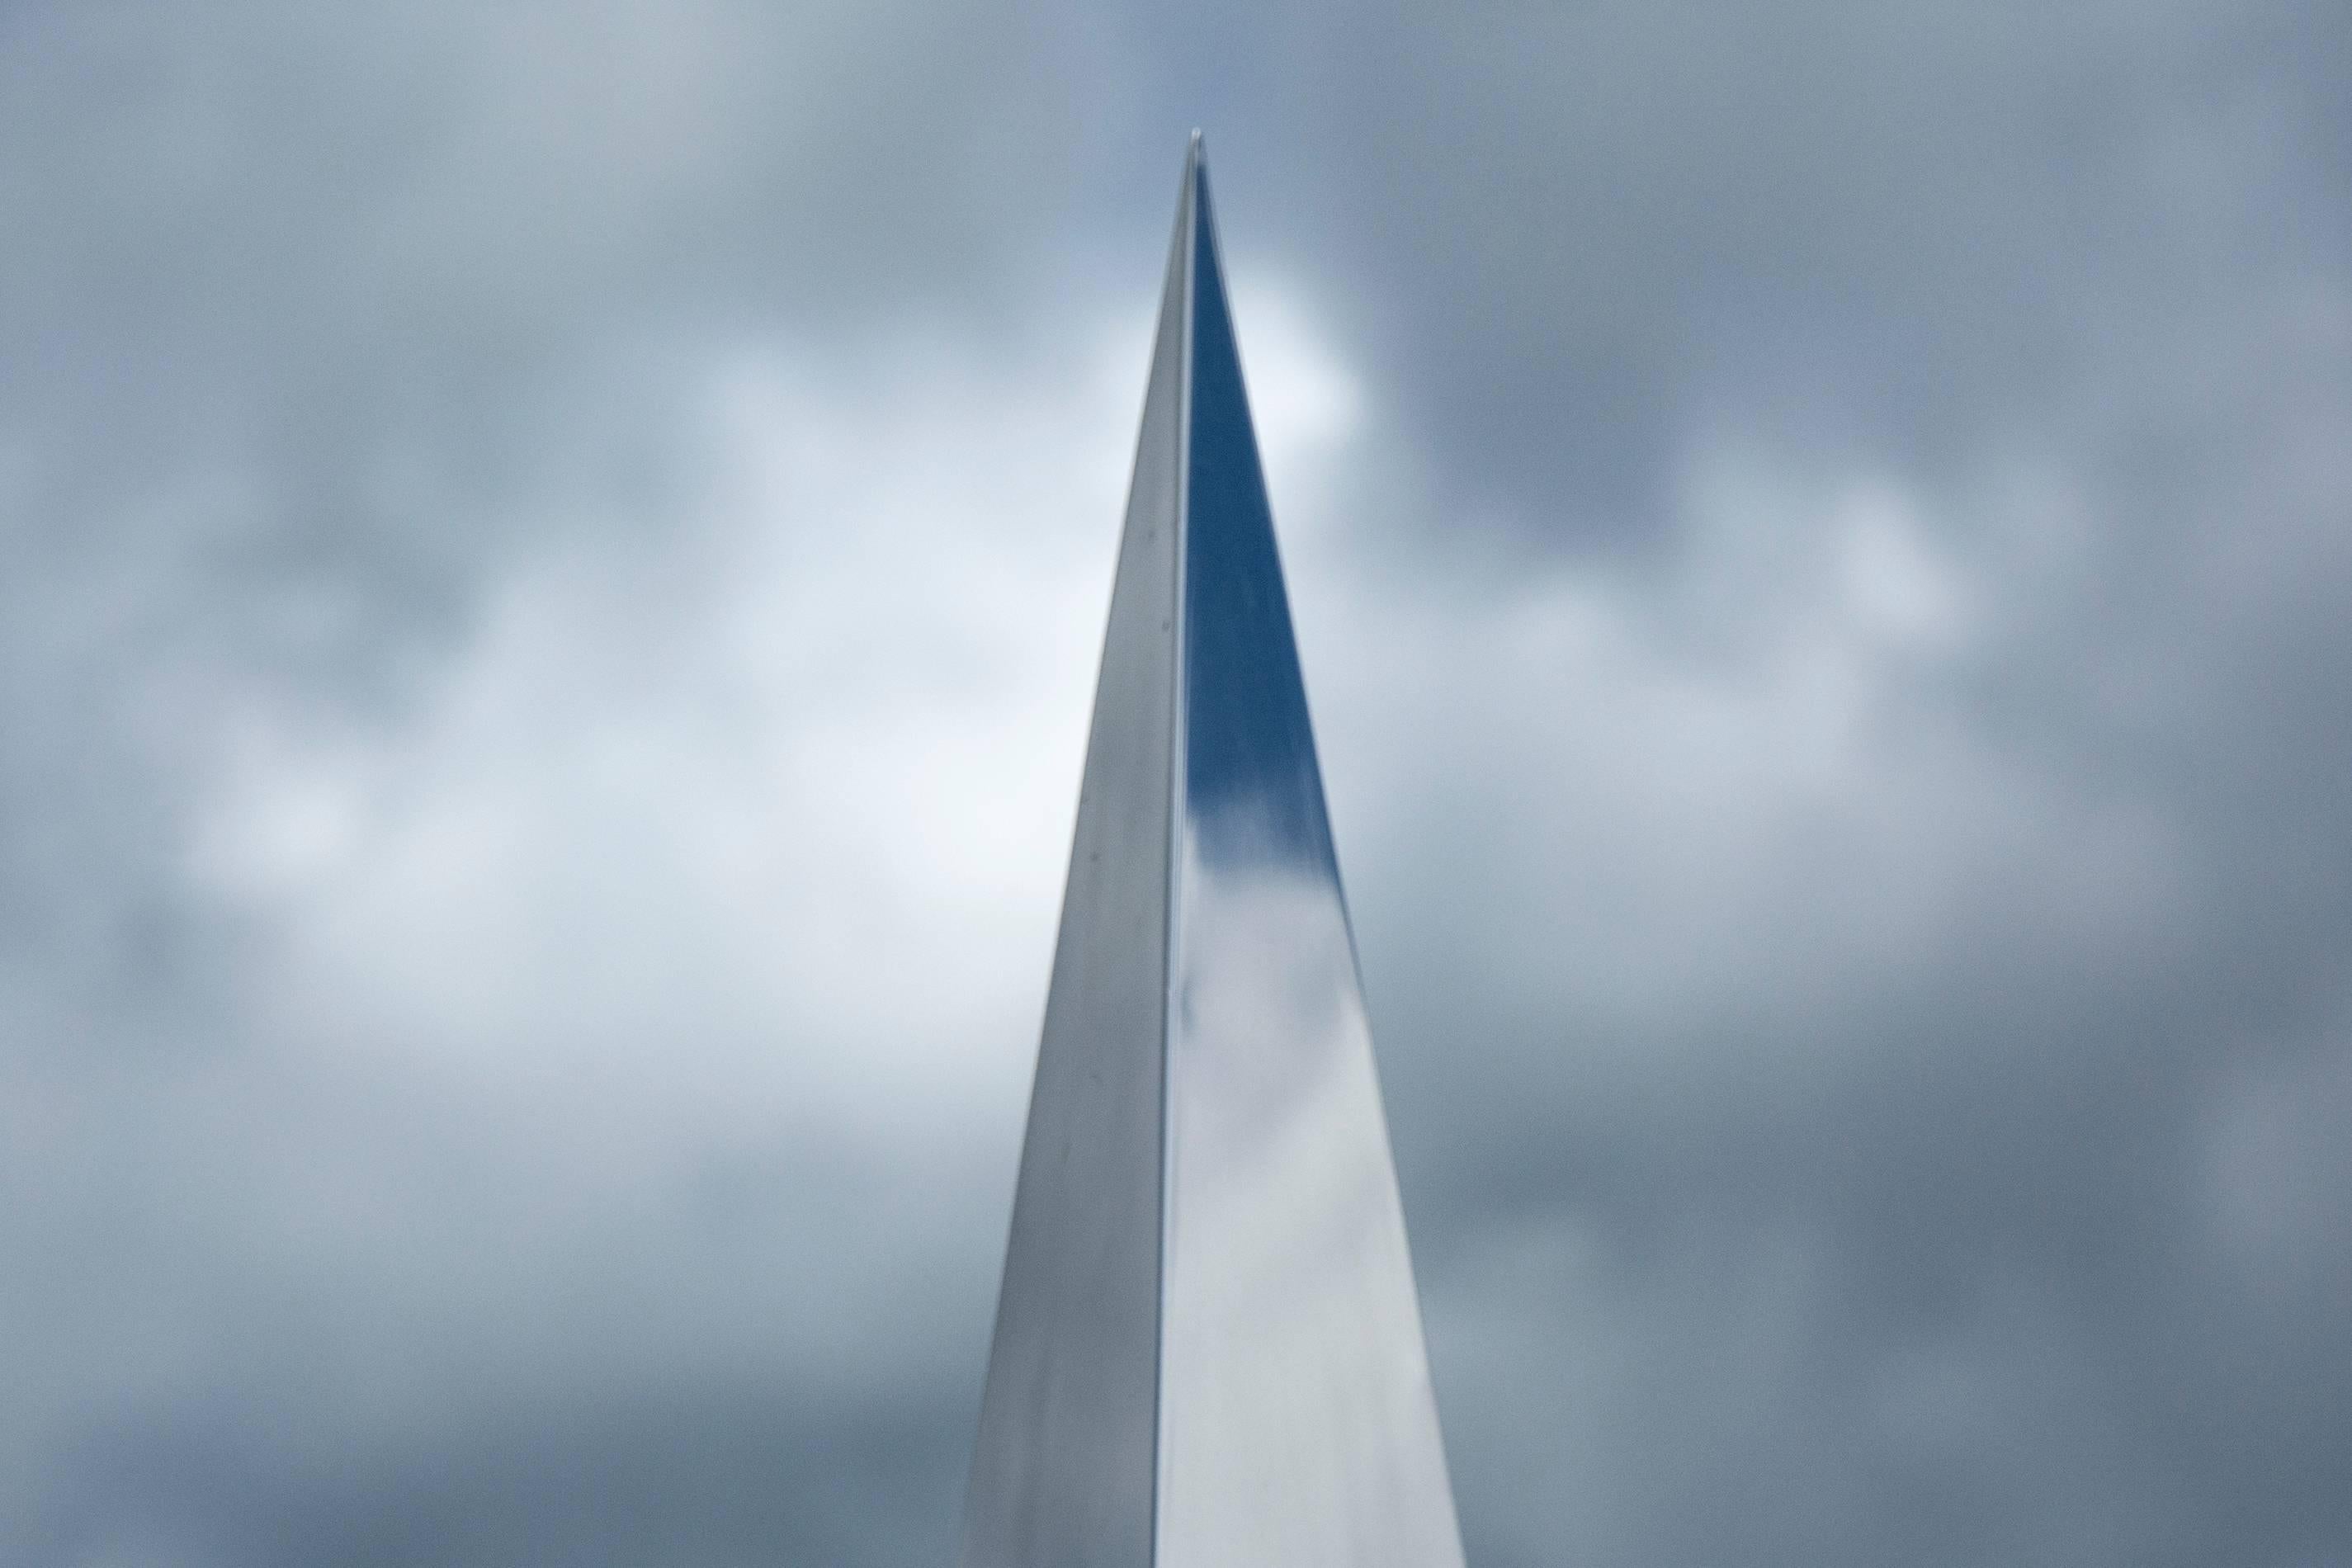 Pyramid of Reflection - tall, outdoor, triangular, stainless steel sculpture - Abstract Sculpture by Wojtek Biczysko